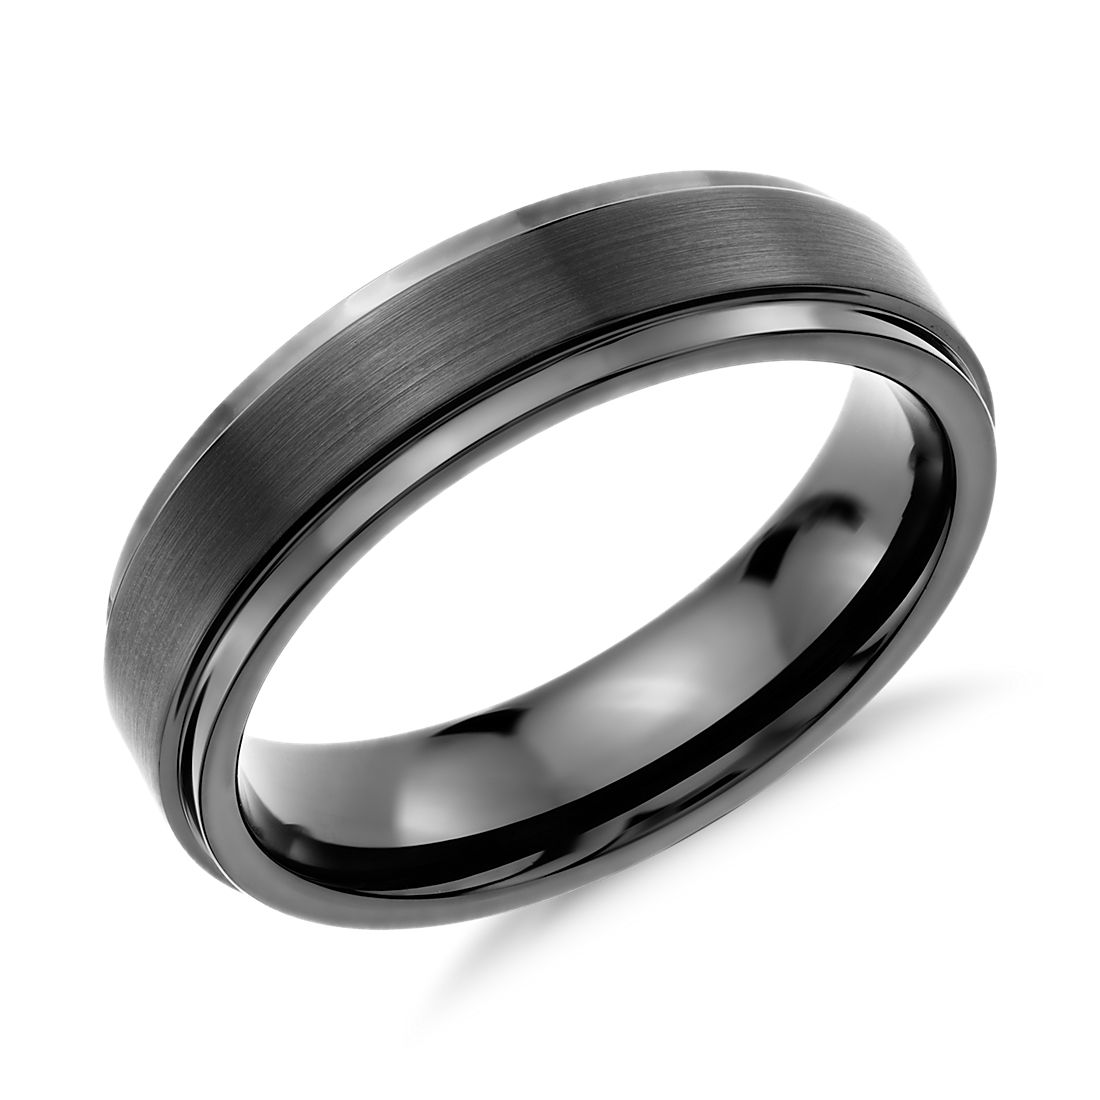 Bishilin 6MM Stainless Steel High Polished Women Mens Wedding Rings Black 